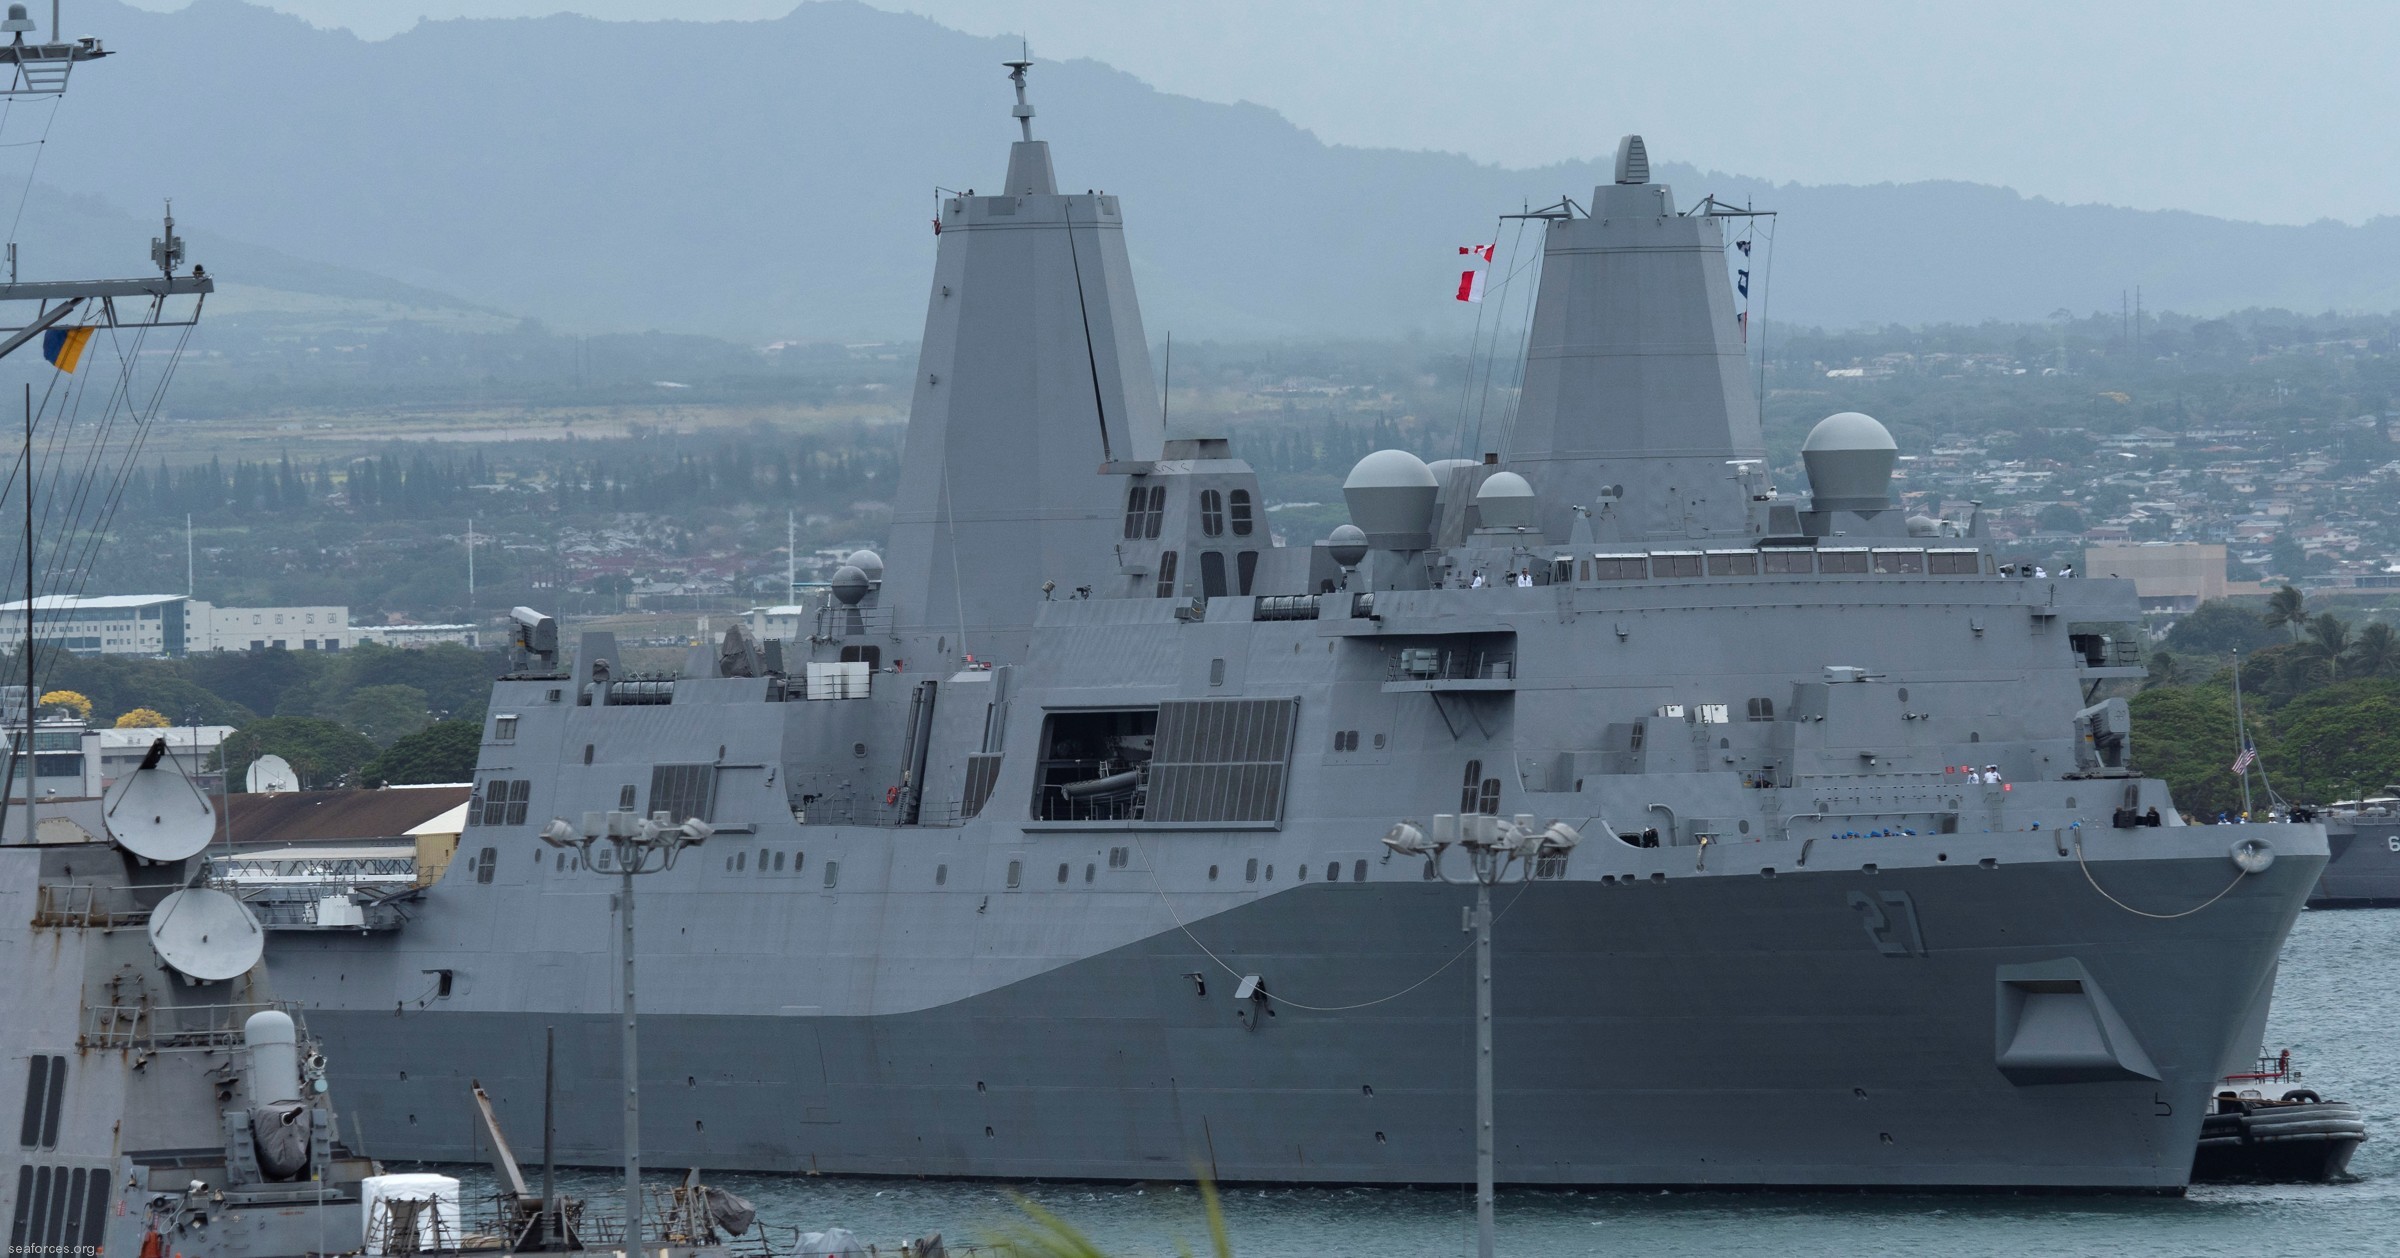 lpd-27 uss portland san antonio class amphibious transport dock ship navy 02 joint base pearl harbor hickam hawaii